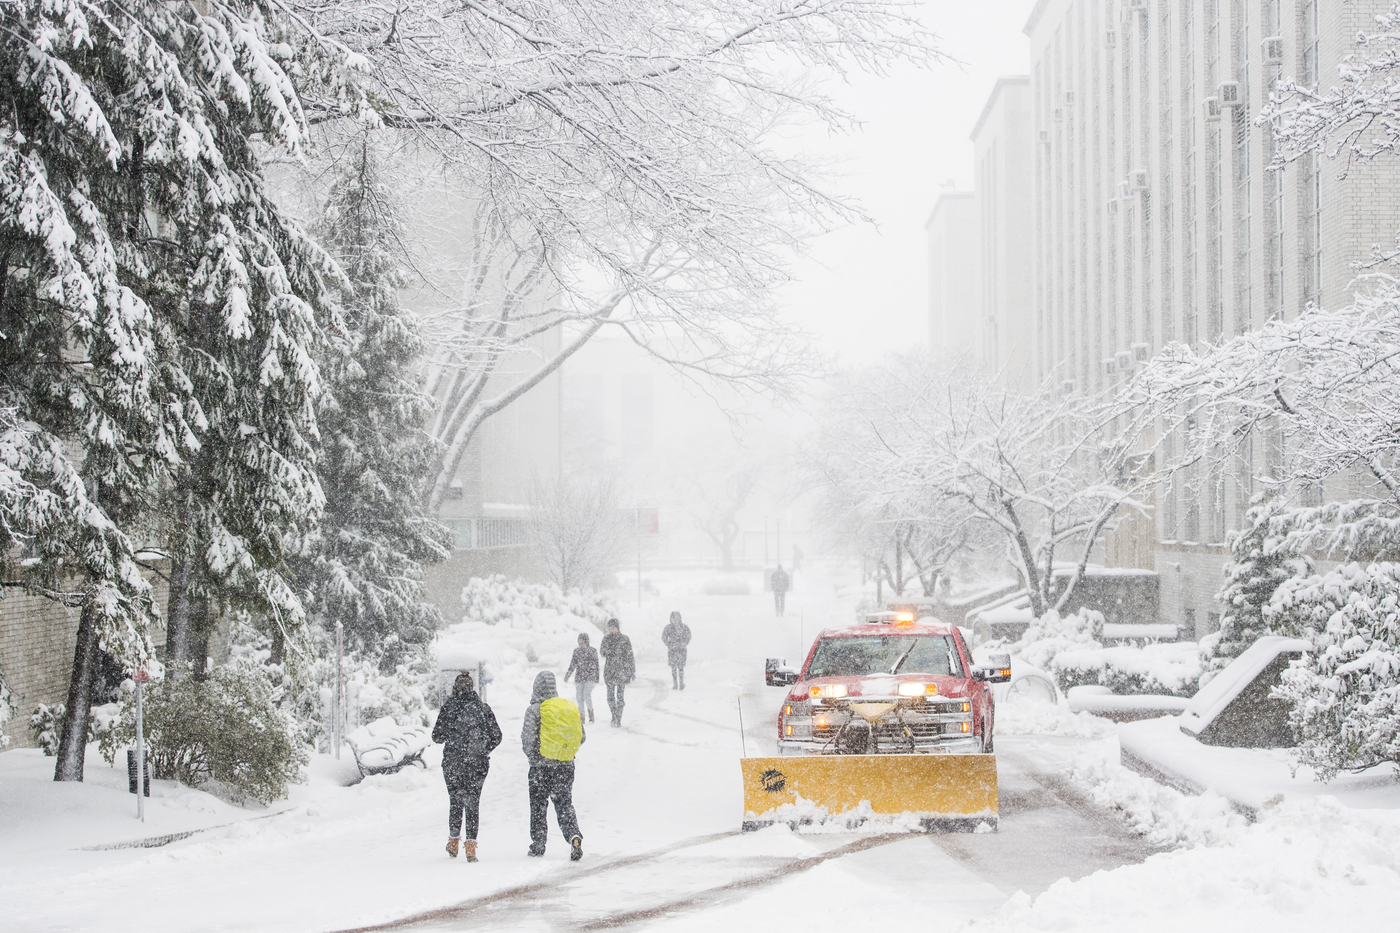 Snow team works through storm to get campus ready News Northeastern